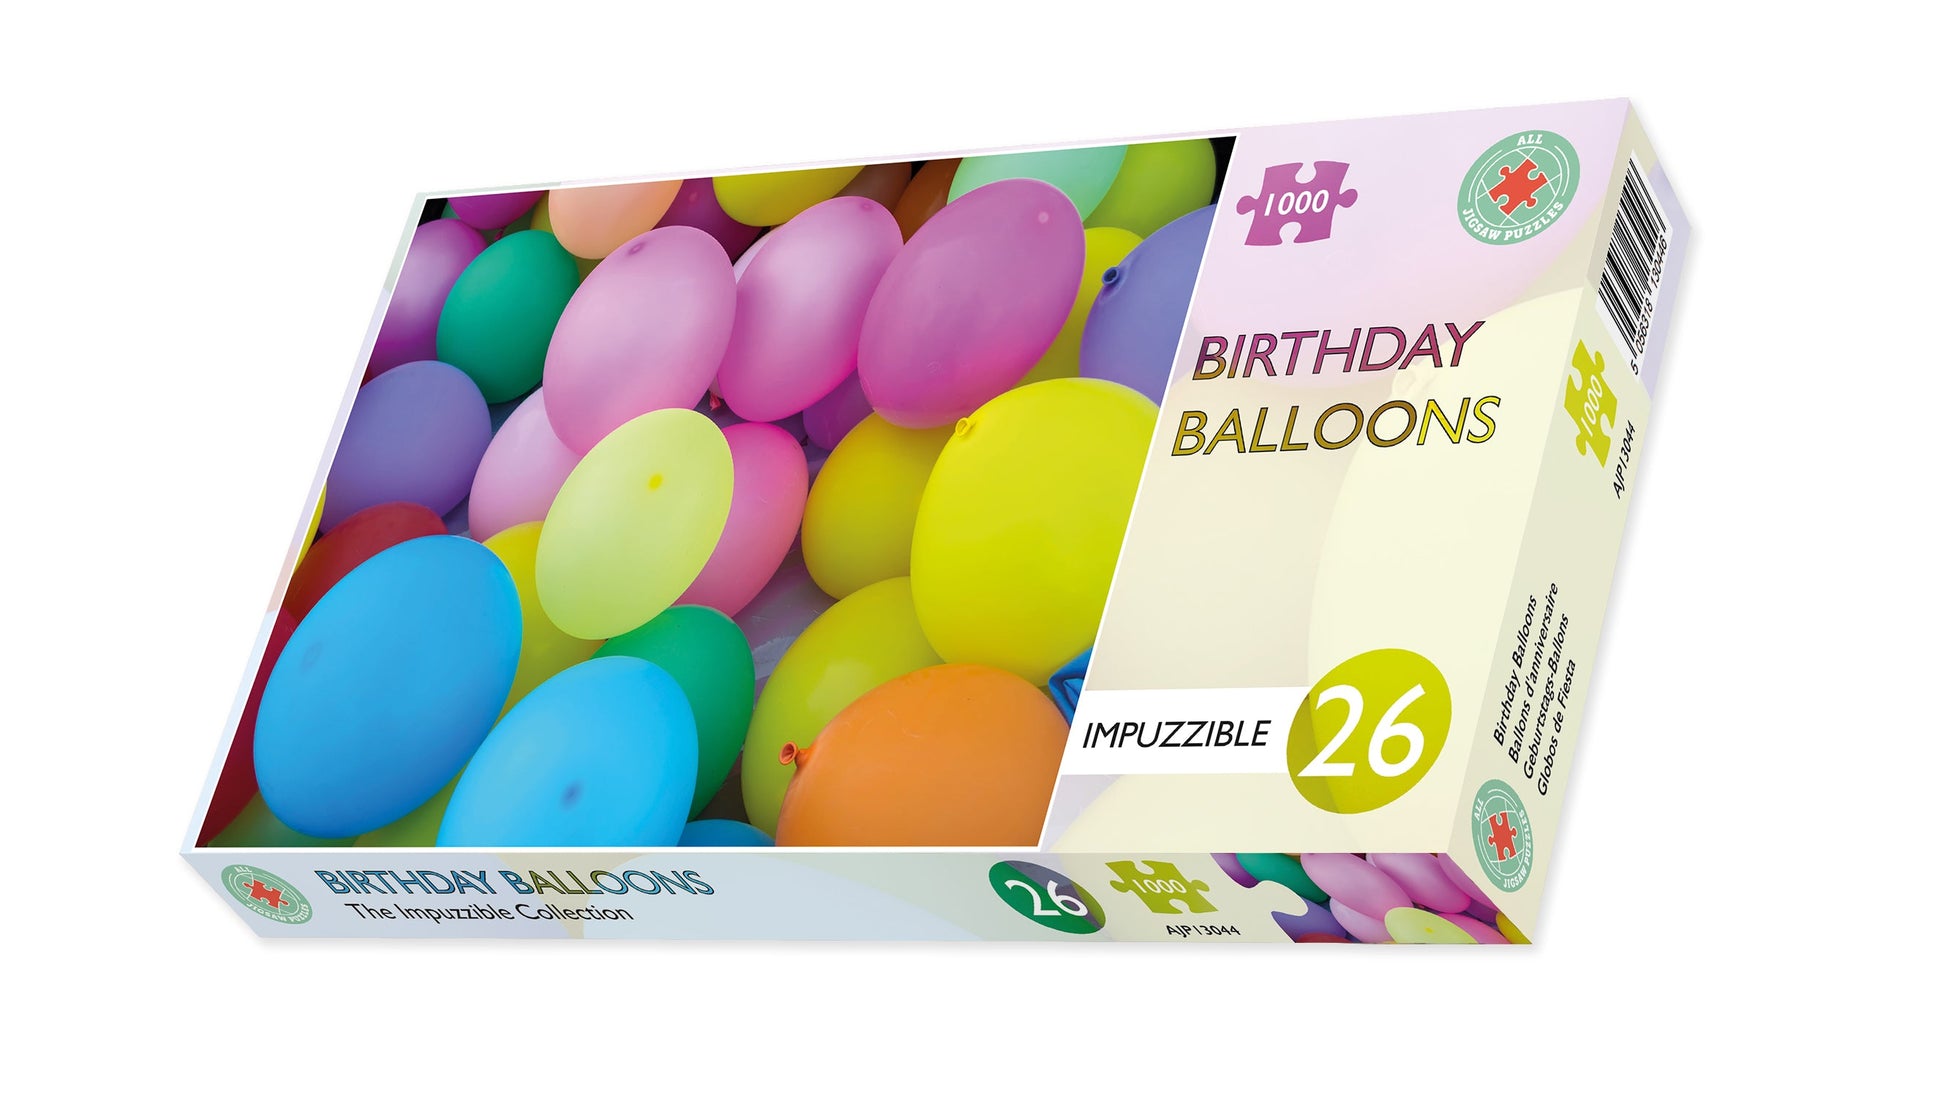 Birthday Balloons - Impuzzible No. 26 - 1000 Piece Jigsaw Puzzle box